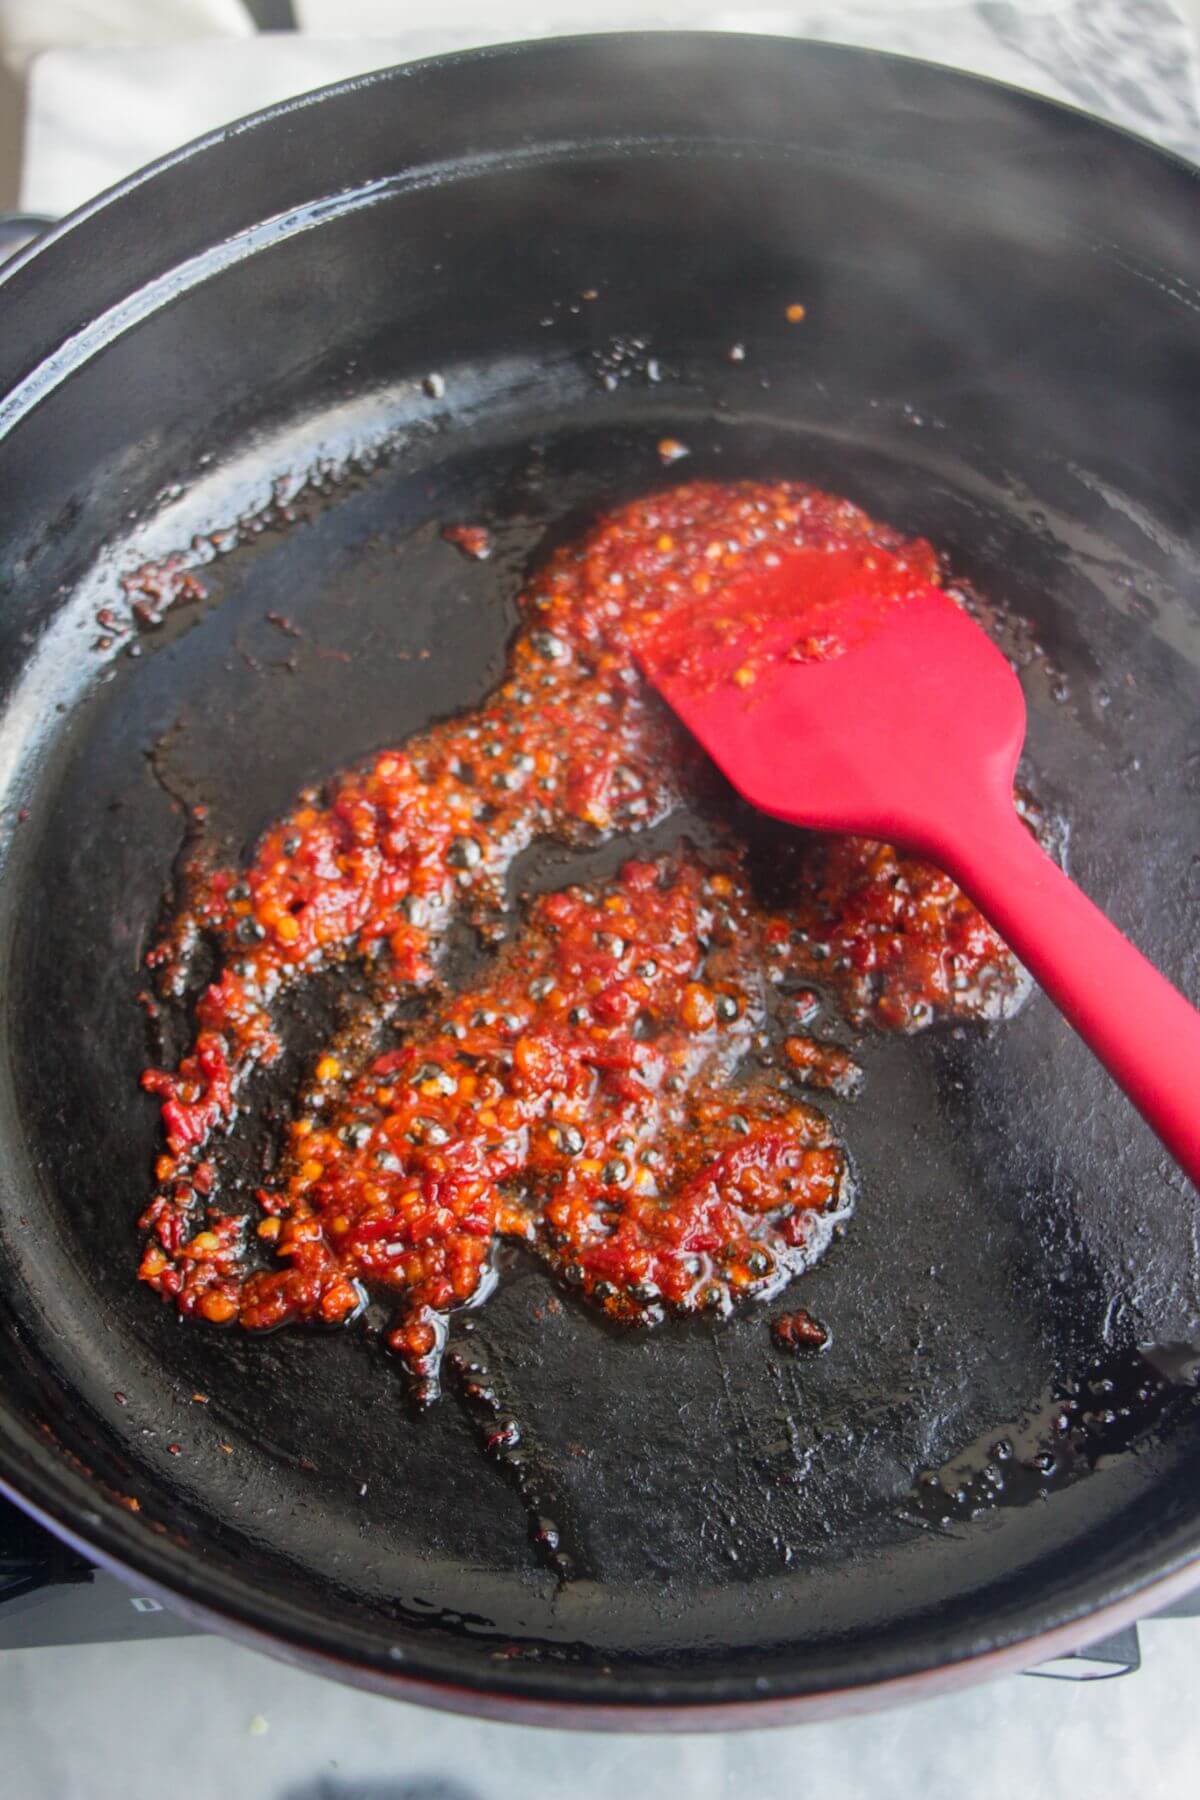 Red spatula stirring 'nduja paste in a large black skillet.